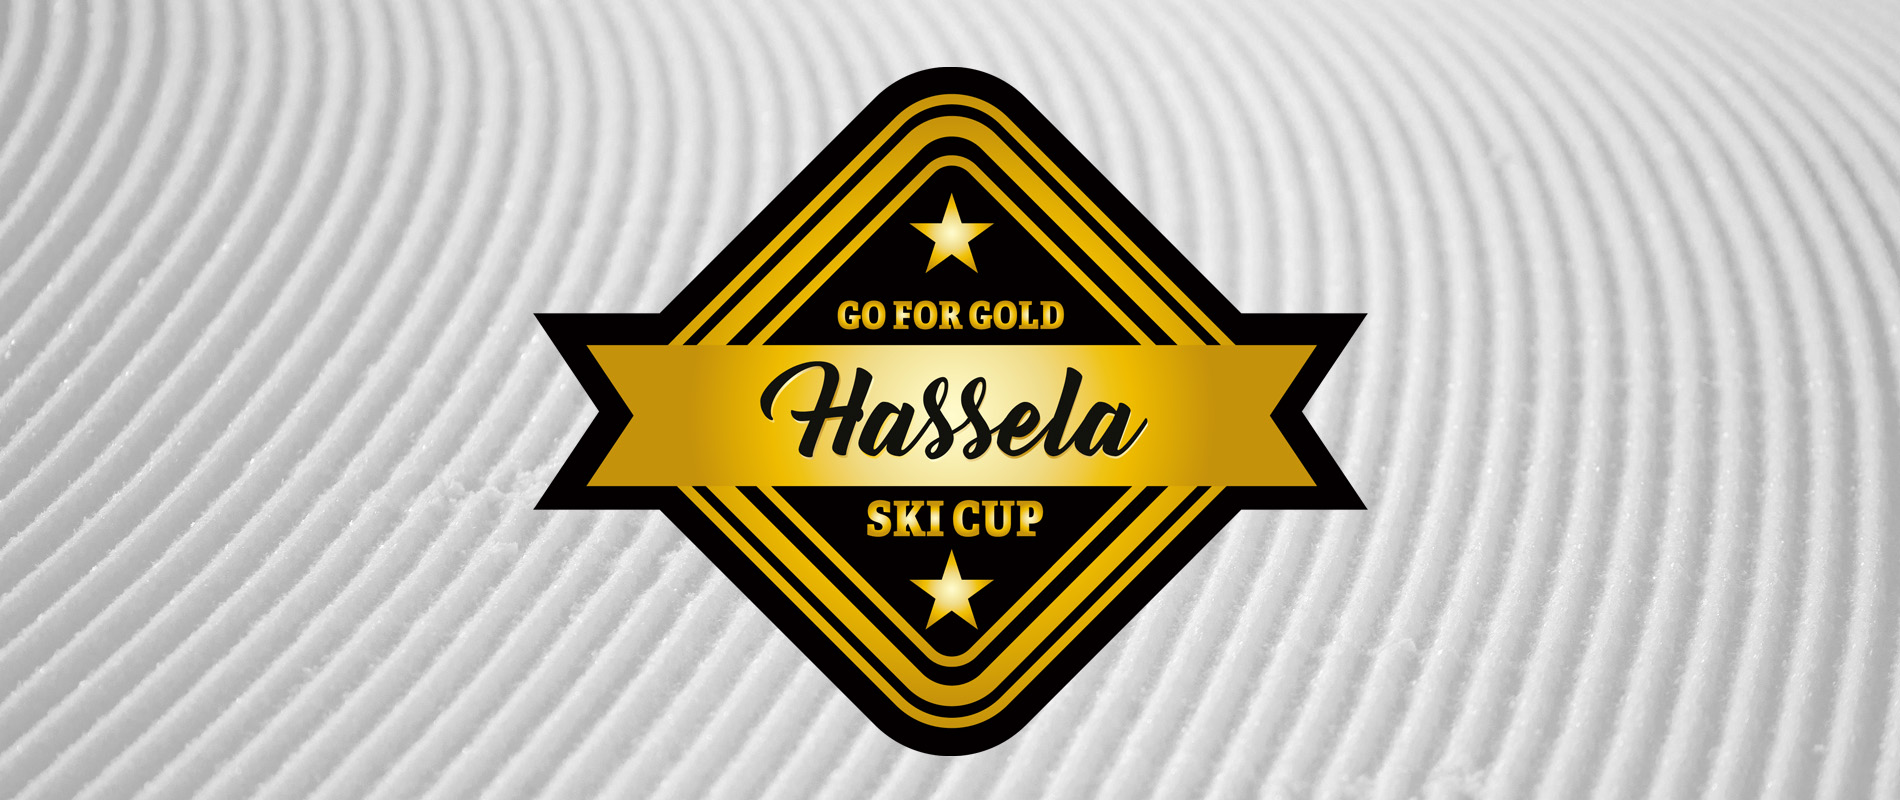 Hassela Ski Cup